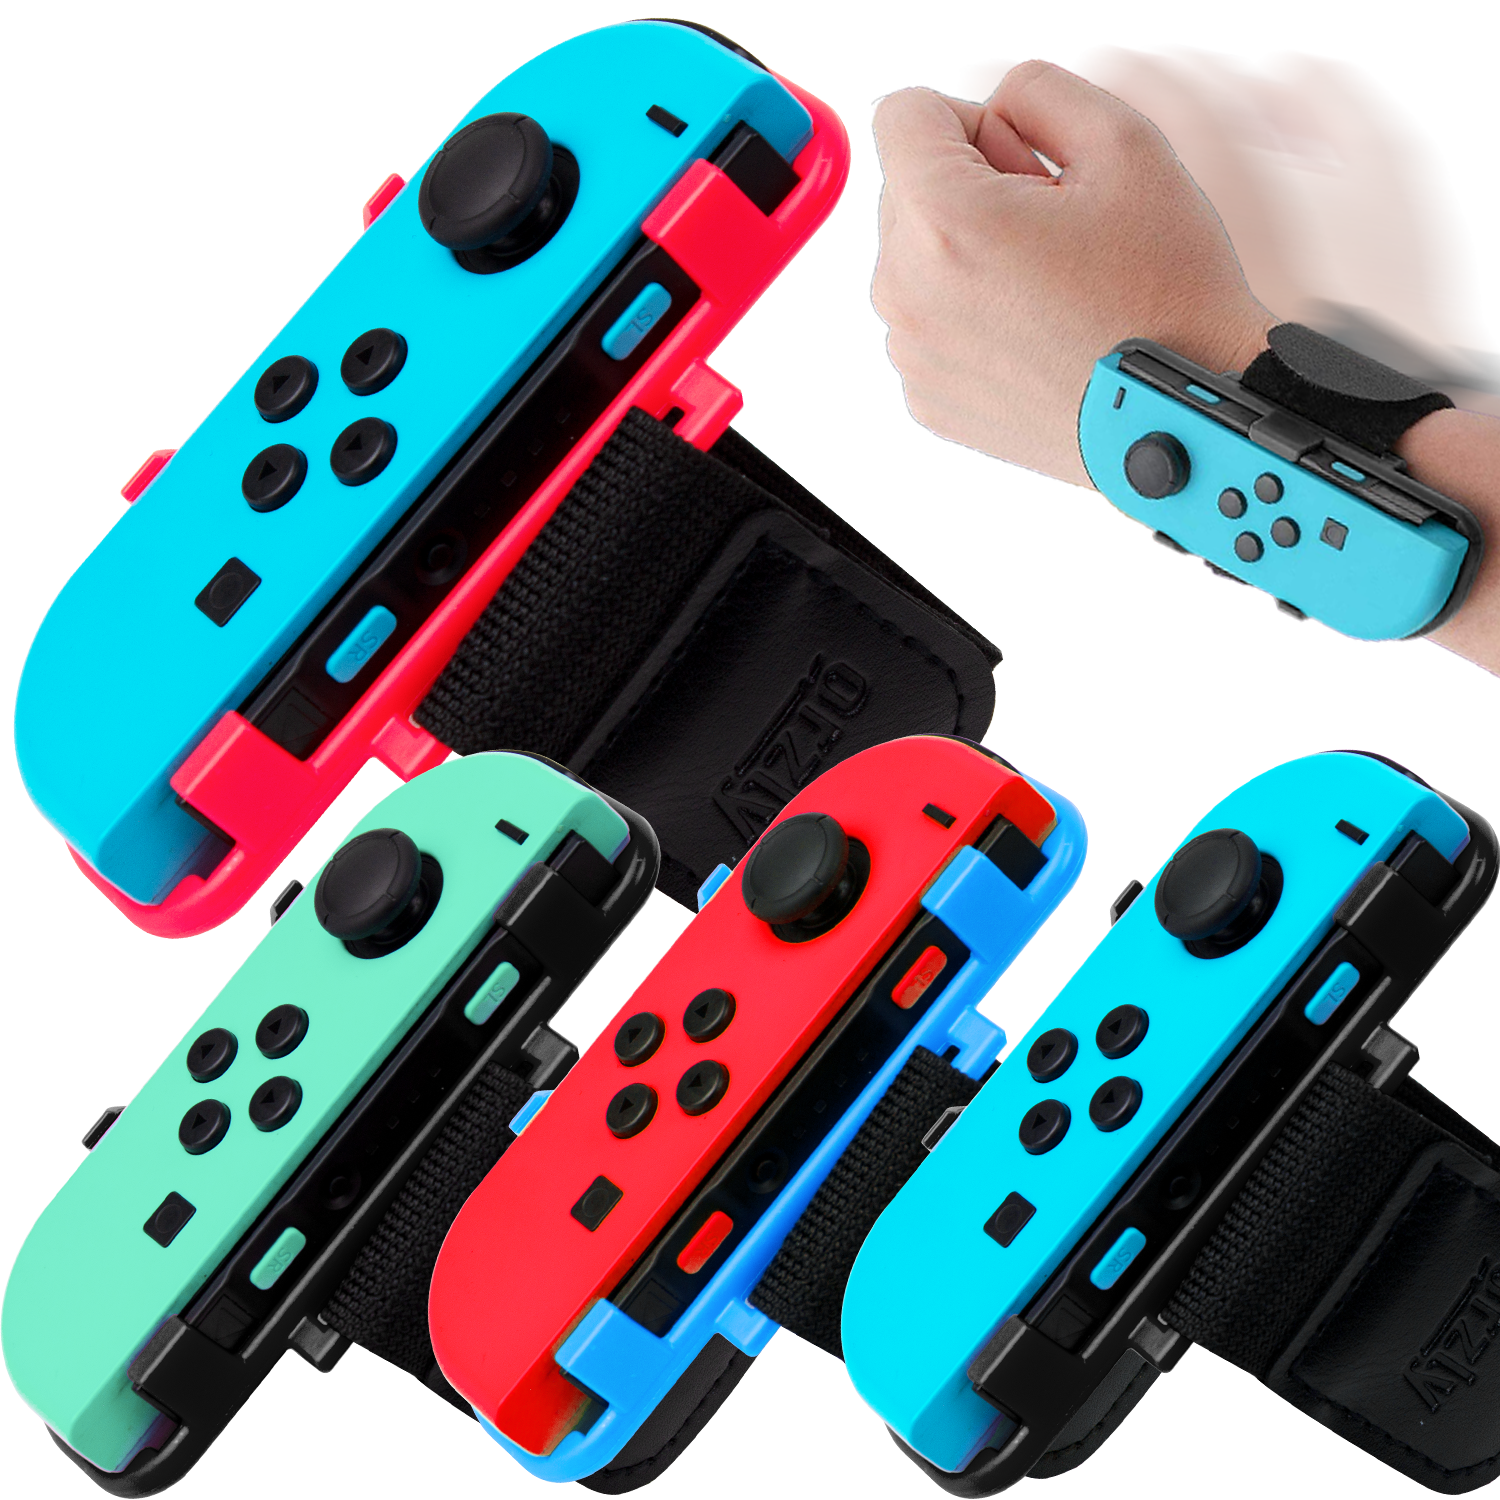 Nintendo Switch Joy-Con (L)